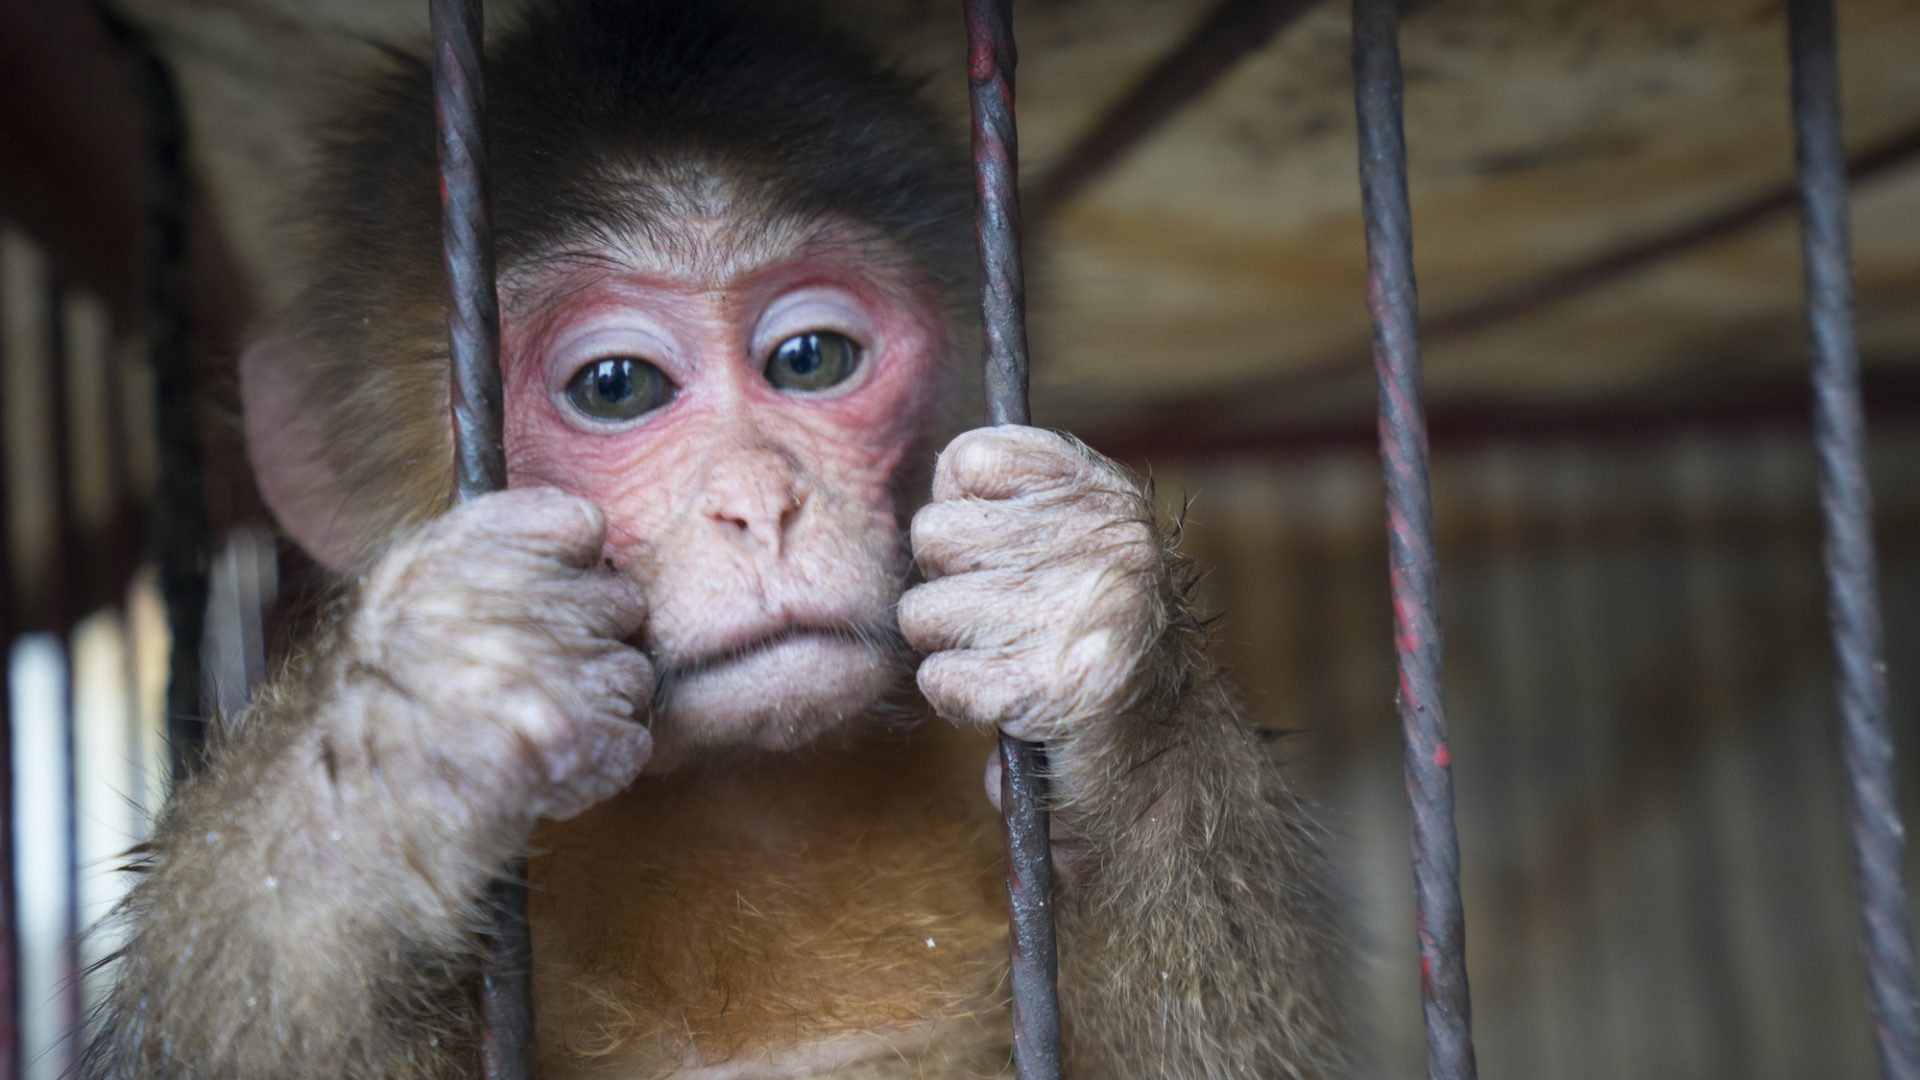 Australia's secret primate experiments | Animals Australia